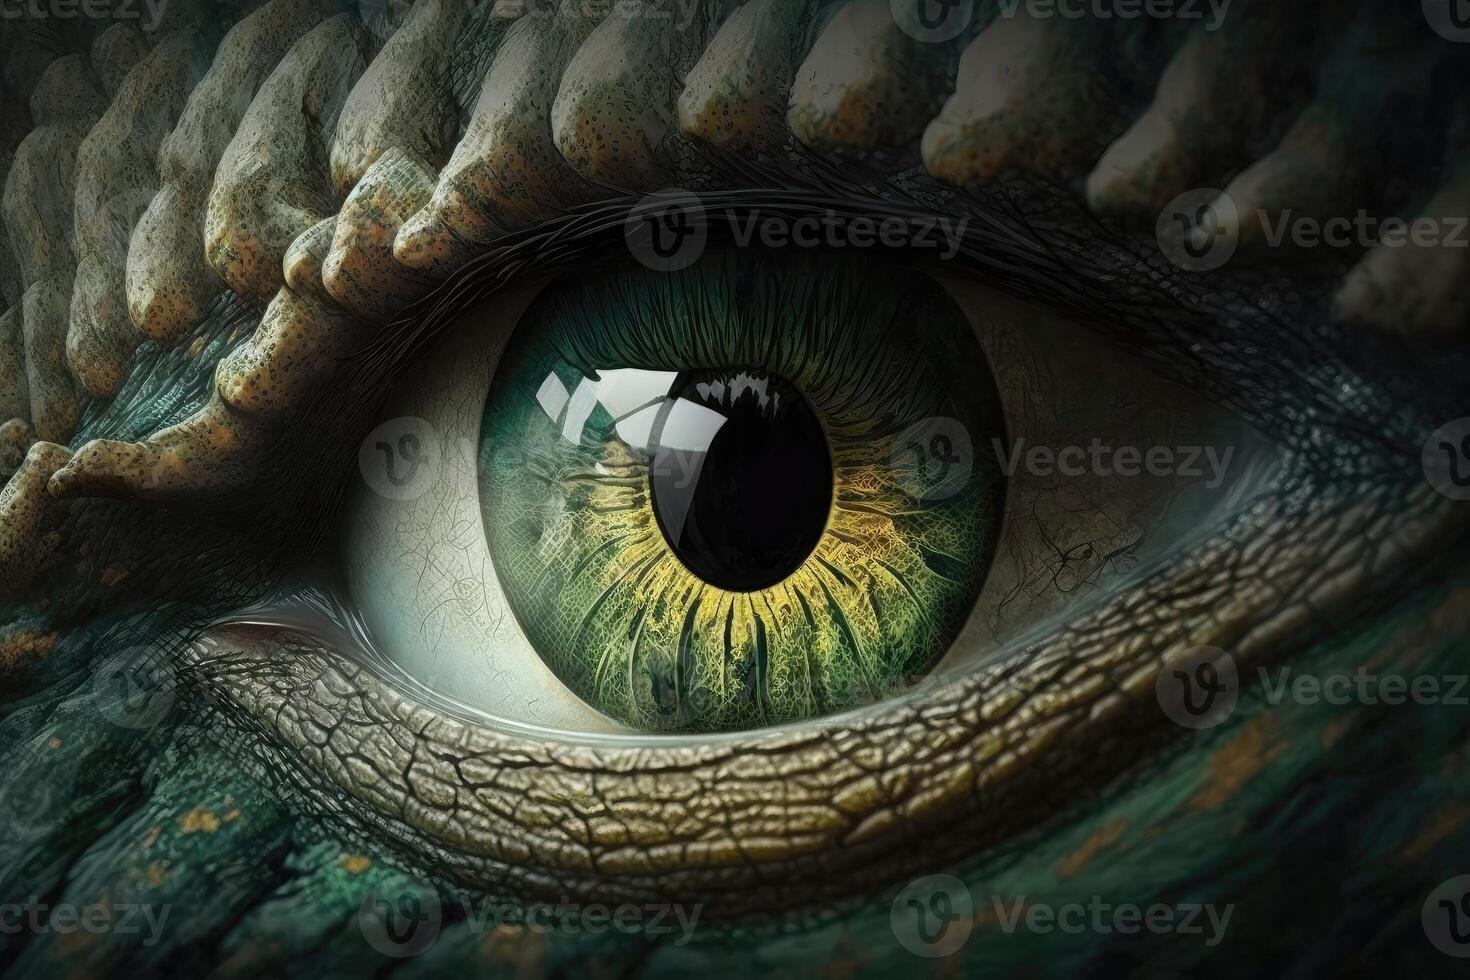 The creature's eye. photo